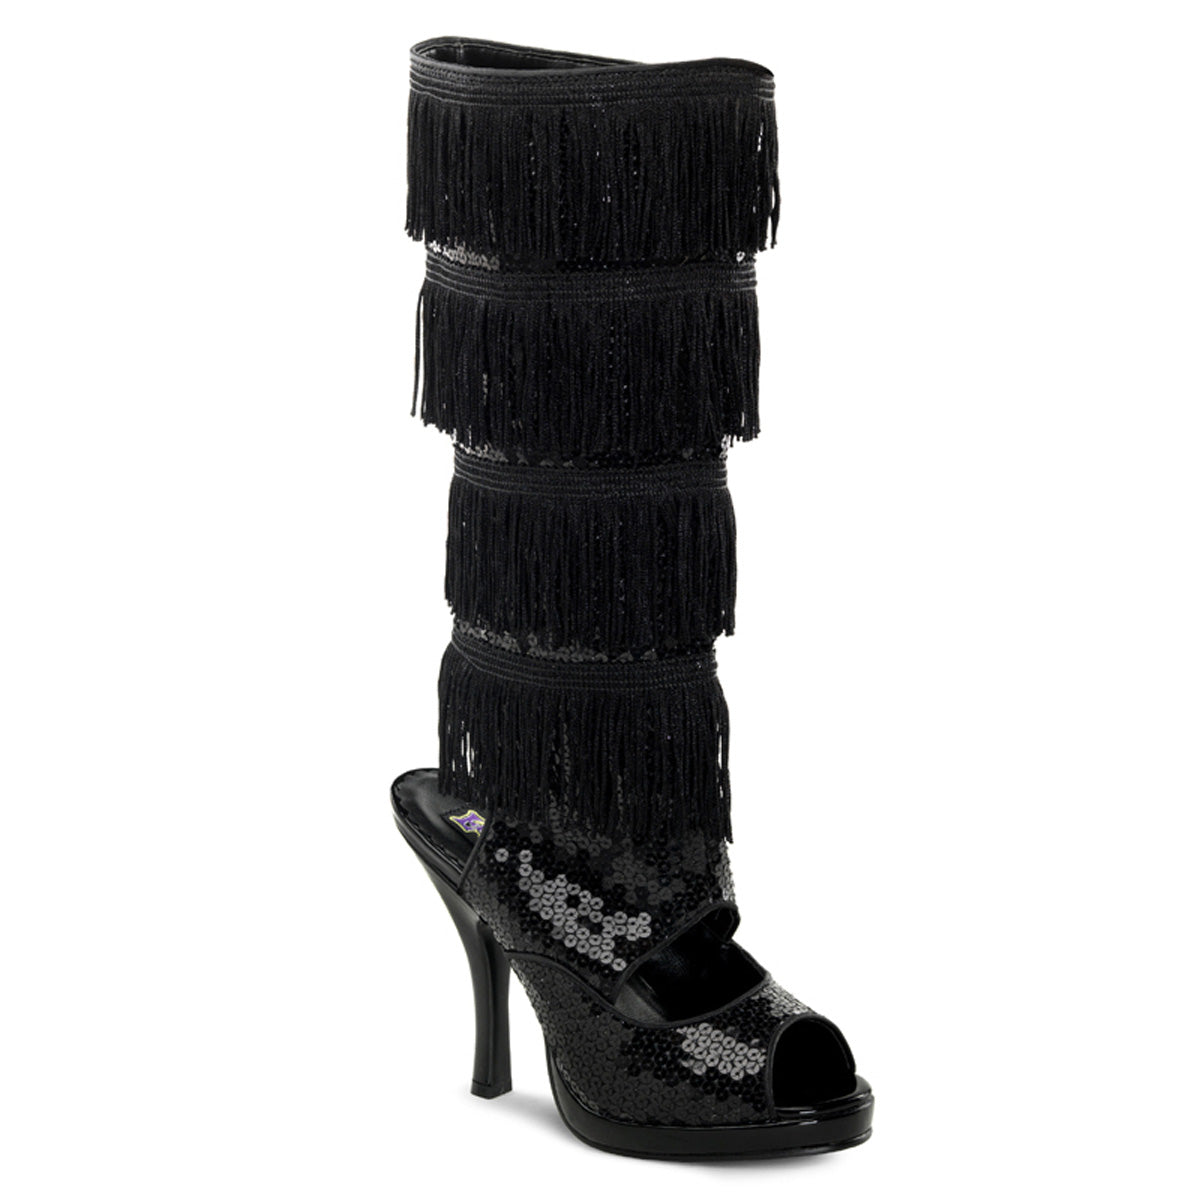 FLAPPER-168 3 Inch Heel Black Sequins Women's Boots Funtasma Costume Shoes